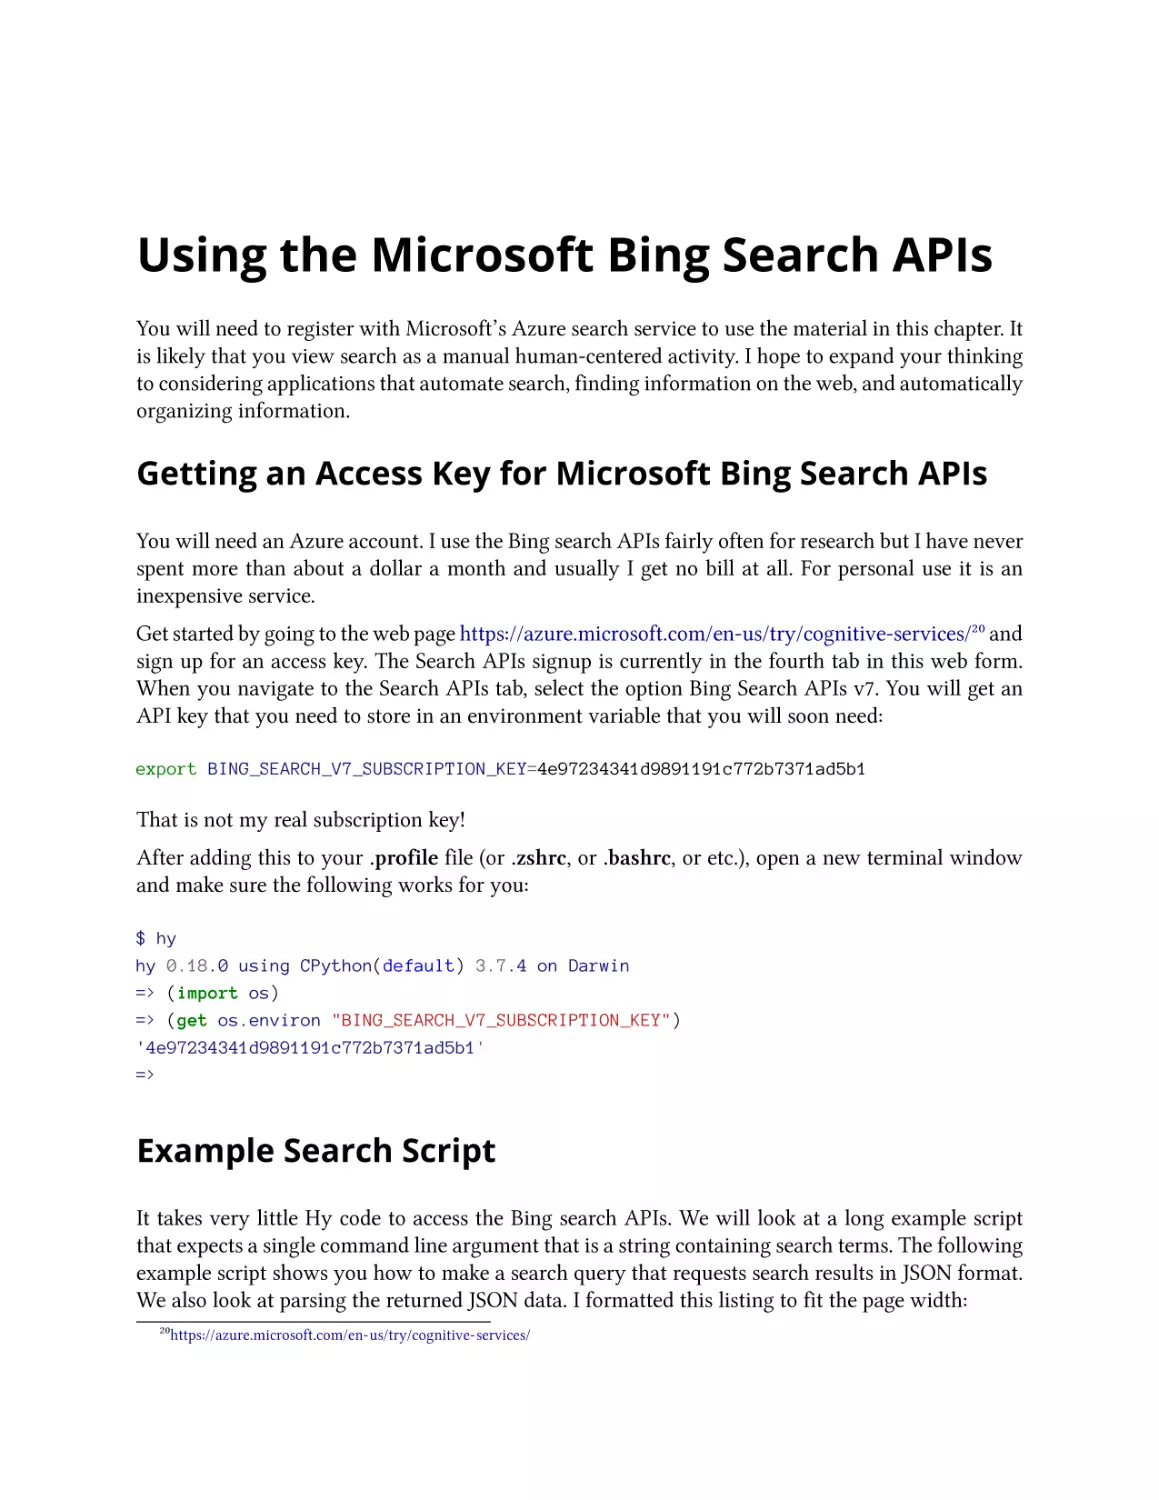 Using the Microsoft Bing Search APIs
Getting an Access Key for Microsoft Bing Search APIs
Example Search Script